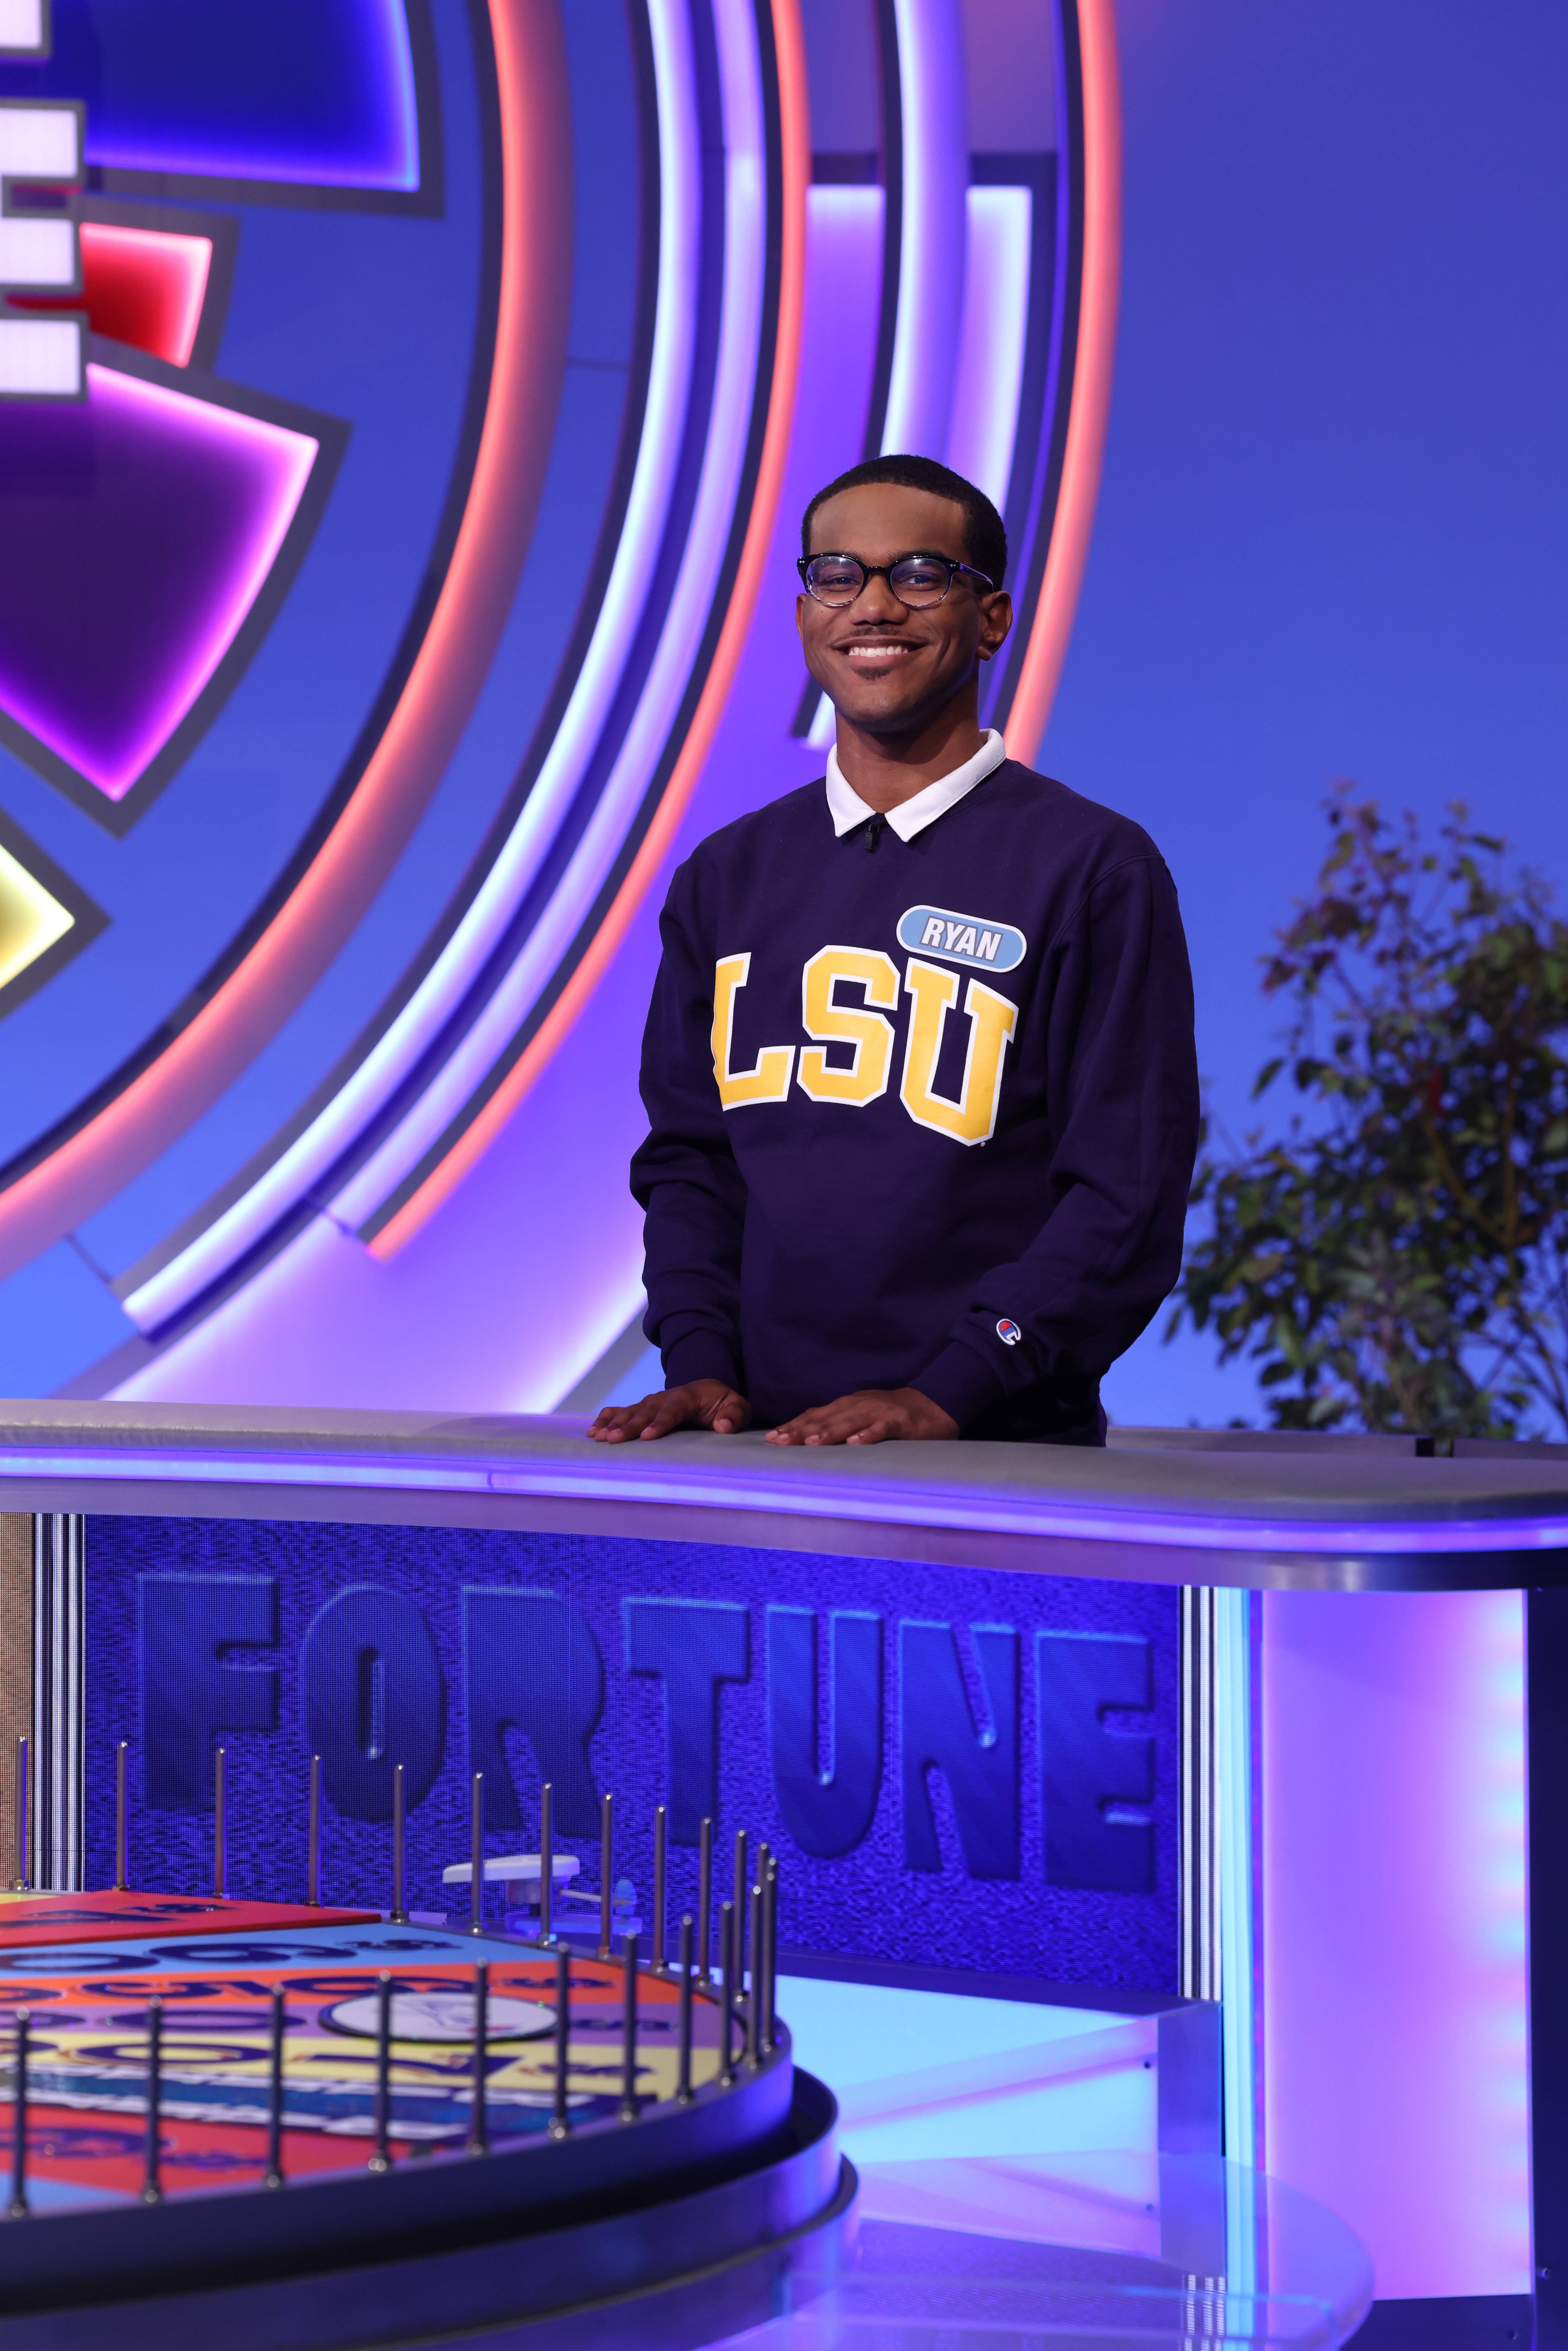 LSU student Ryan Scott appears on set of "Wheel of Fortune"